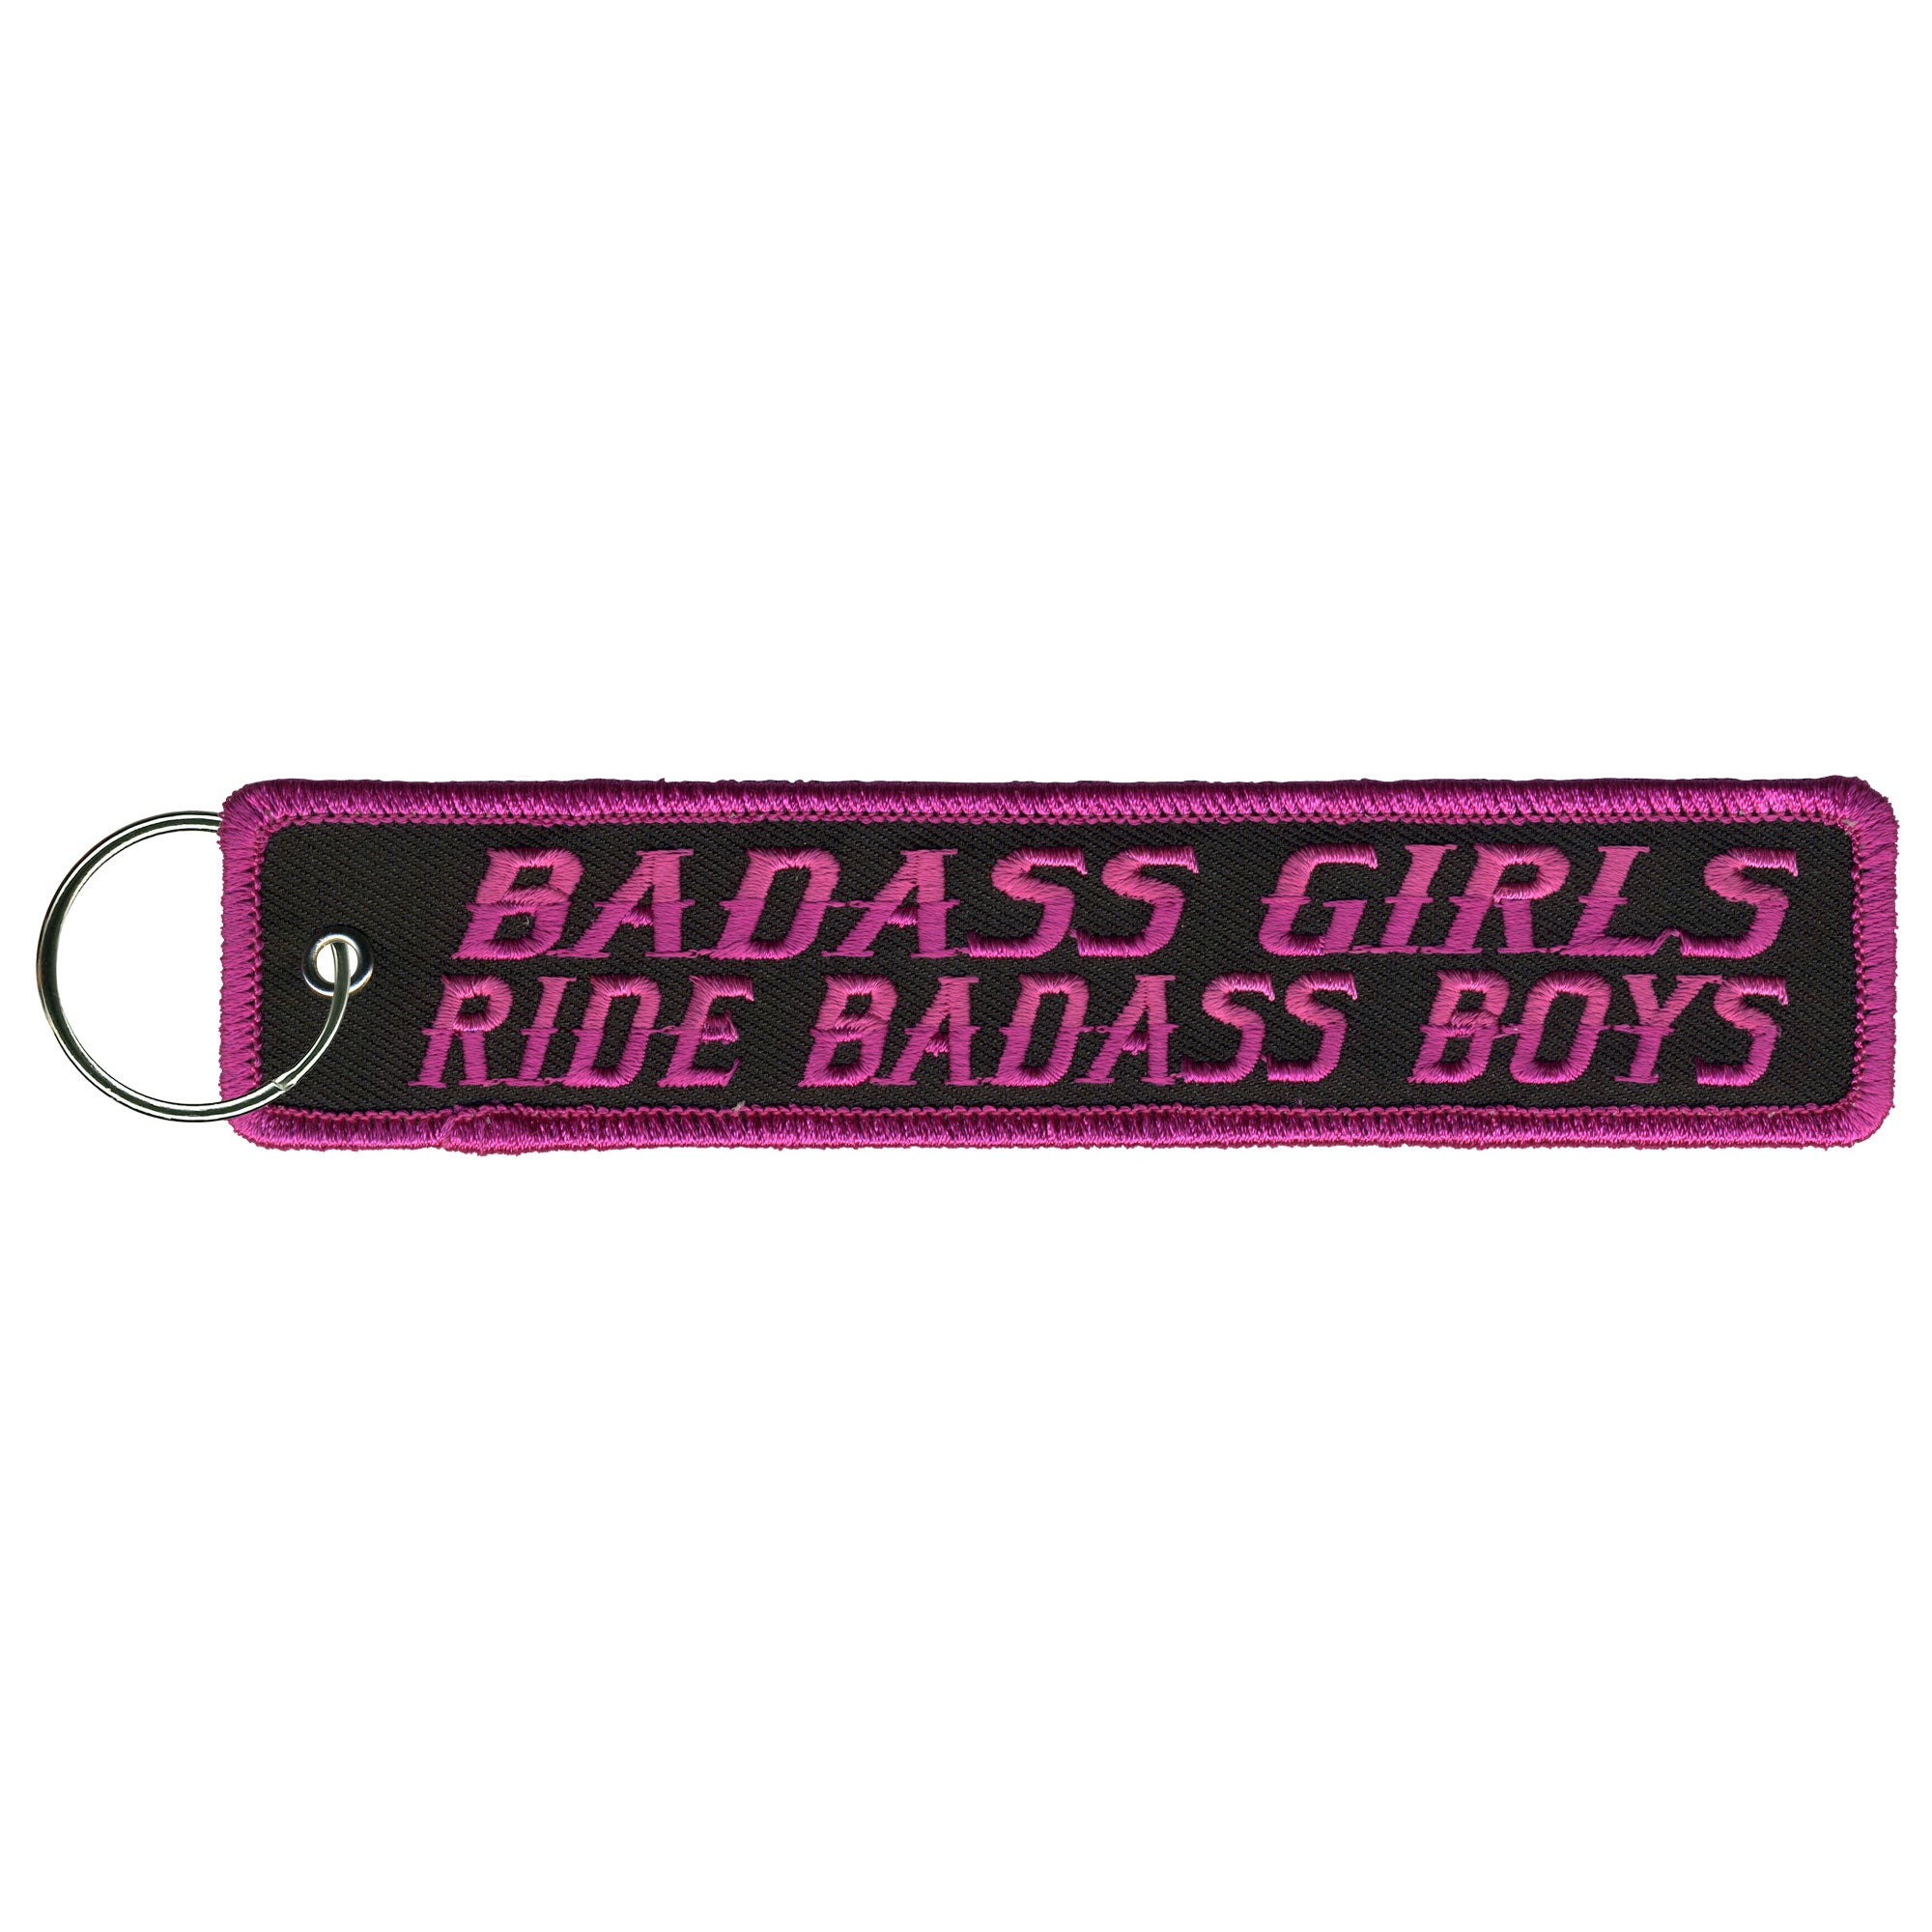 Hot Leathers Badass Girls Key Chain Fob